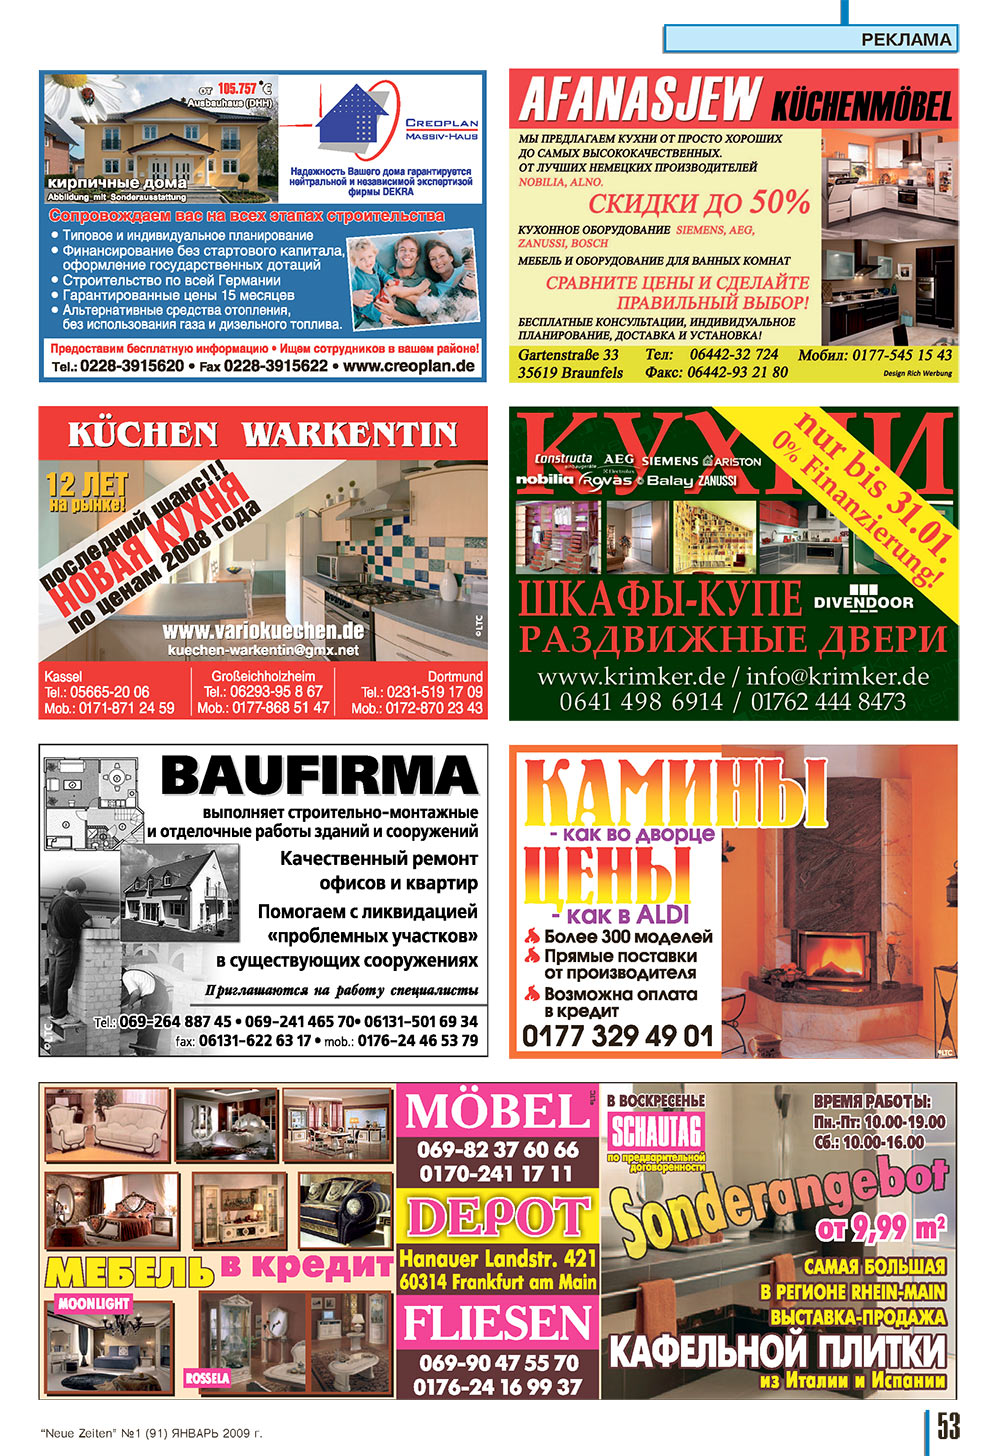 Neue Zeiten (журнал). 2009 год, номер 1, стр. 53